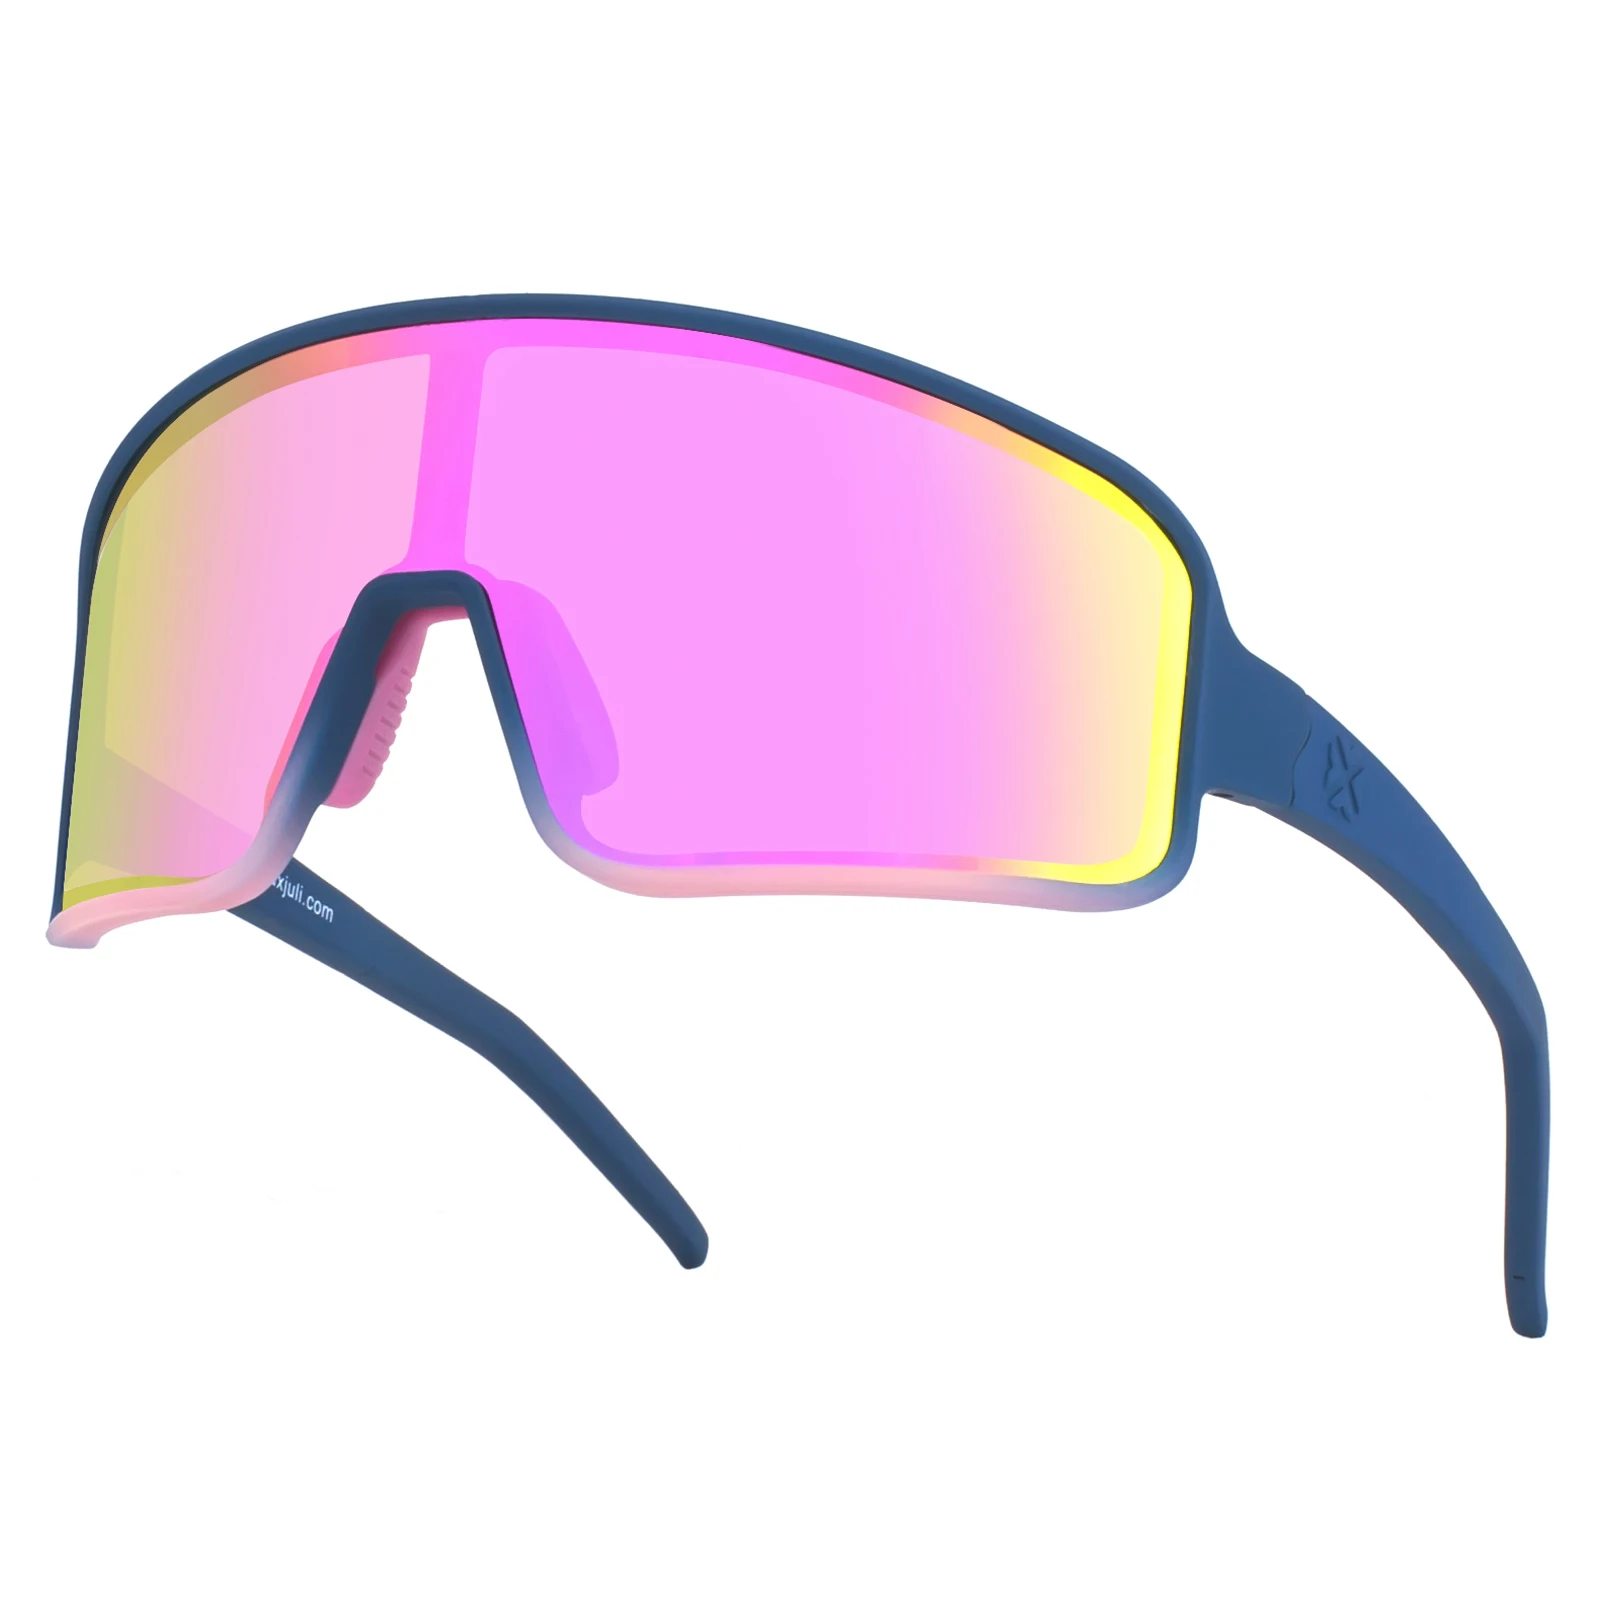 MAXJULI Cycling Glasses Polarized Sports Sunglasses for Men Women for Driving Fishing Baseball Running MTB Outdoor sports 8121